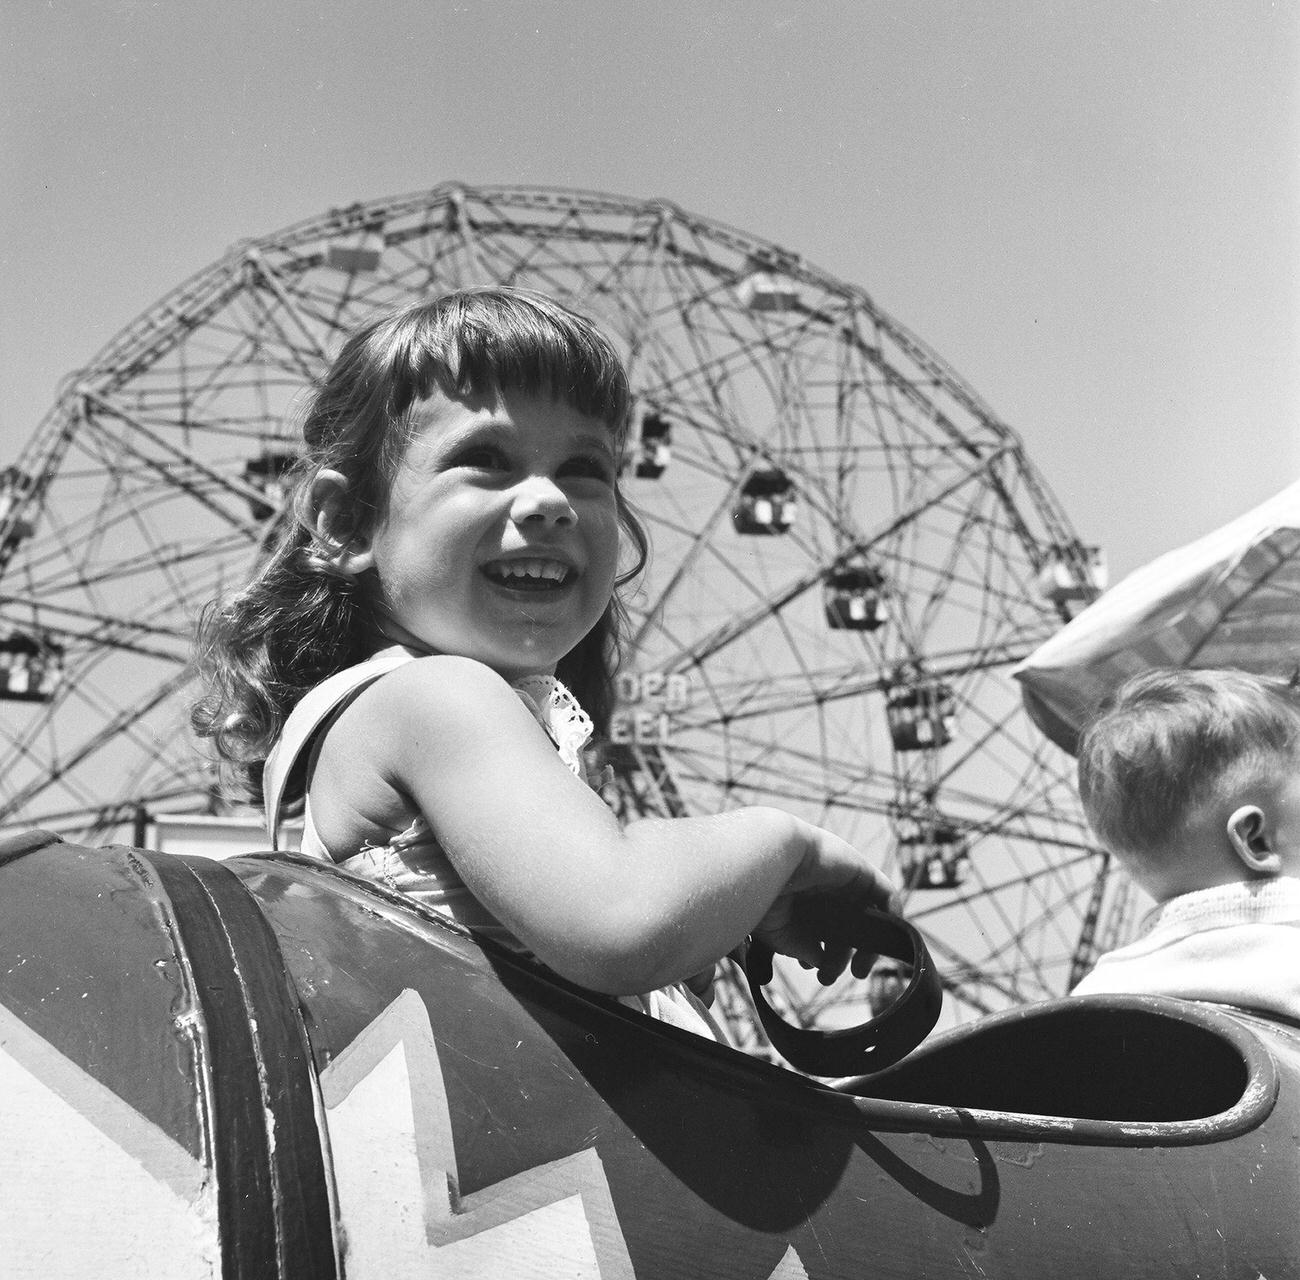 Girl Anticipating Ride, Ferris Wheel In Background, 1948